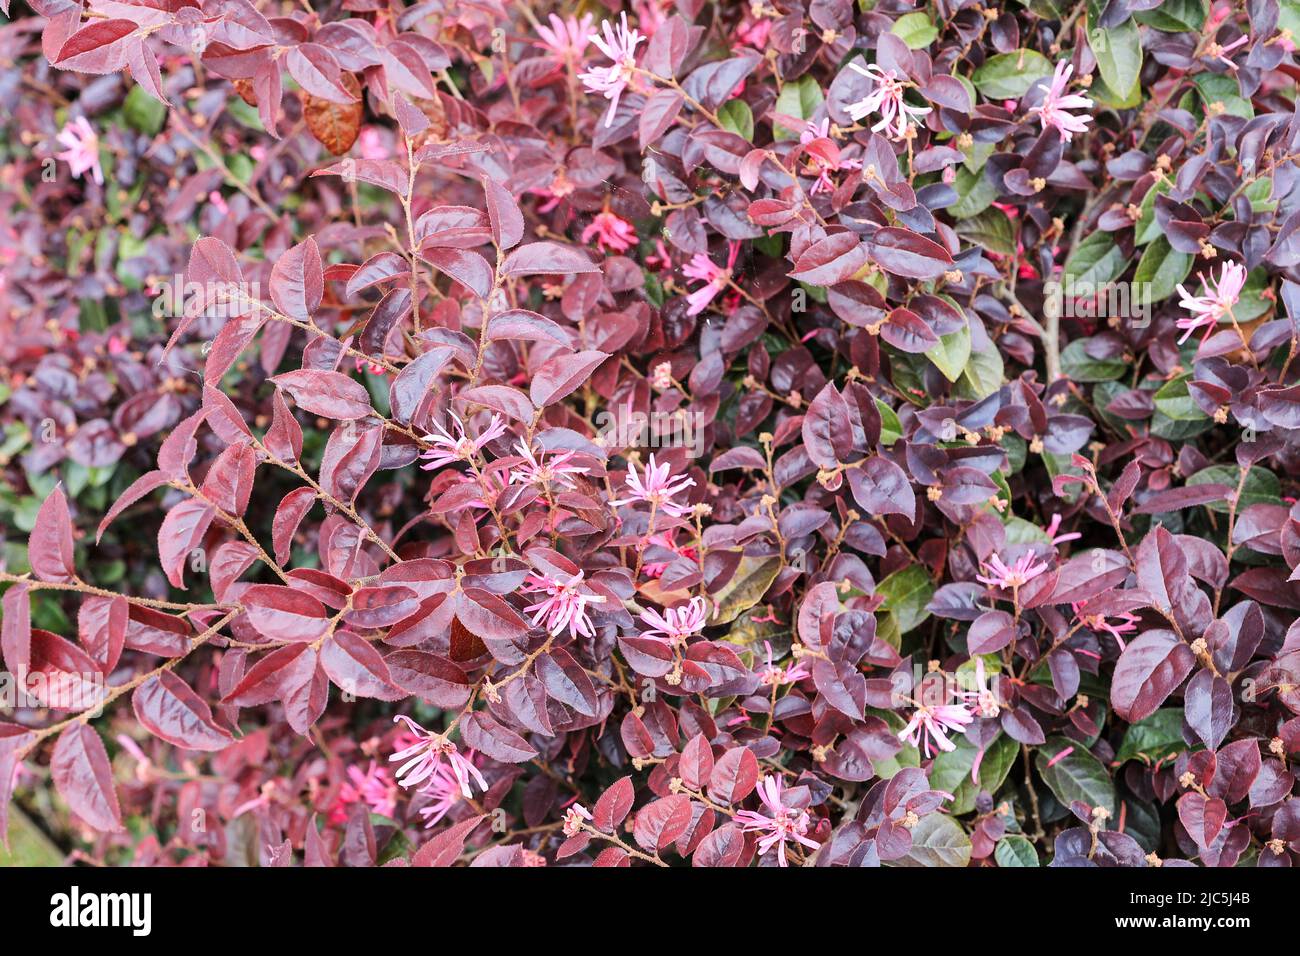 Un florecimiento rosa de Loropetalum o flor china de la franja (Loropetalum chinense) o arbusto de la flor de la correa o arbusto Foto de stock